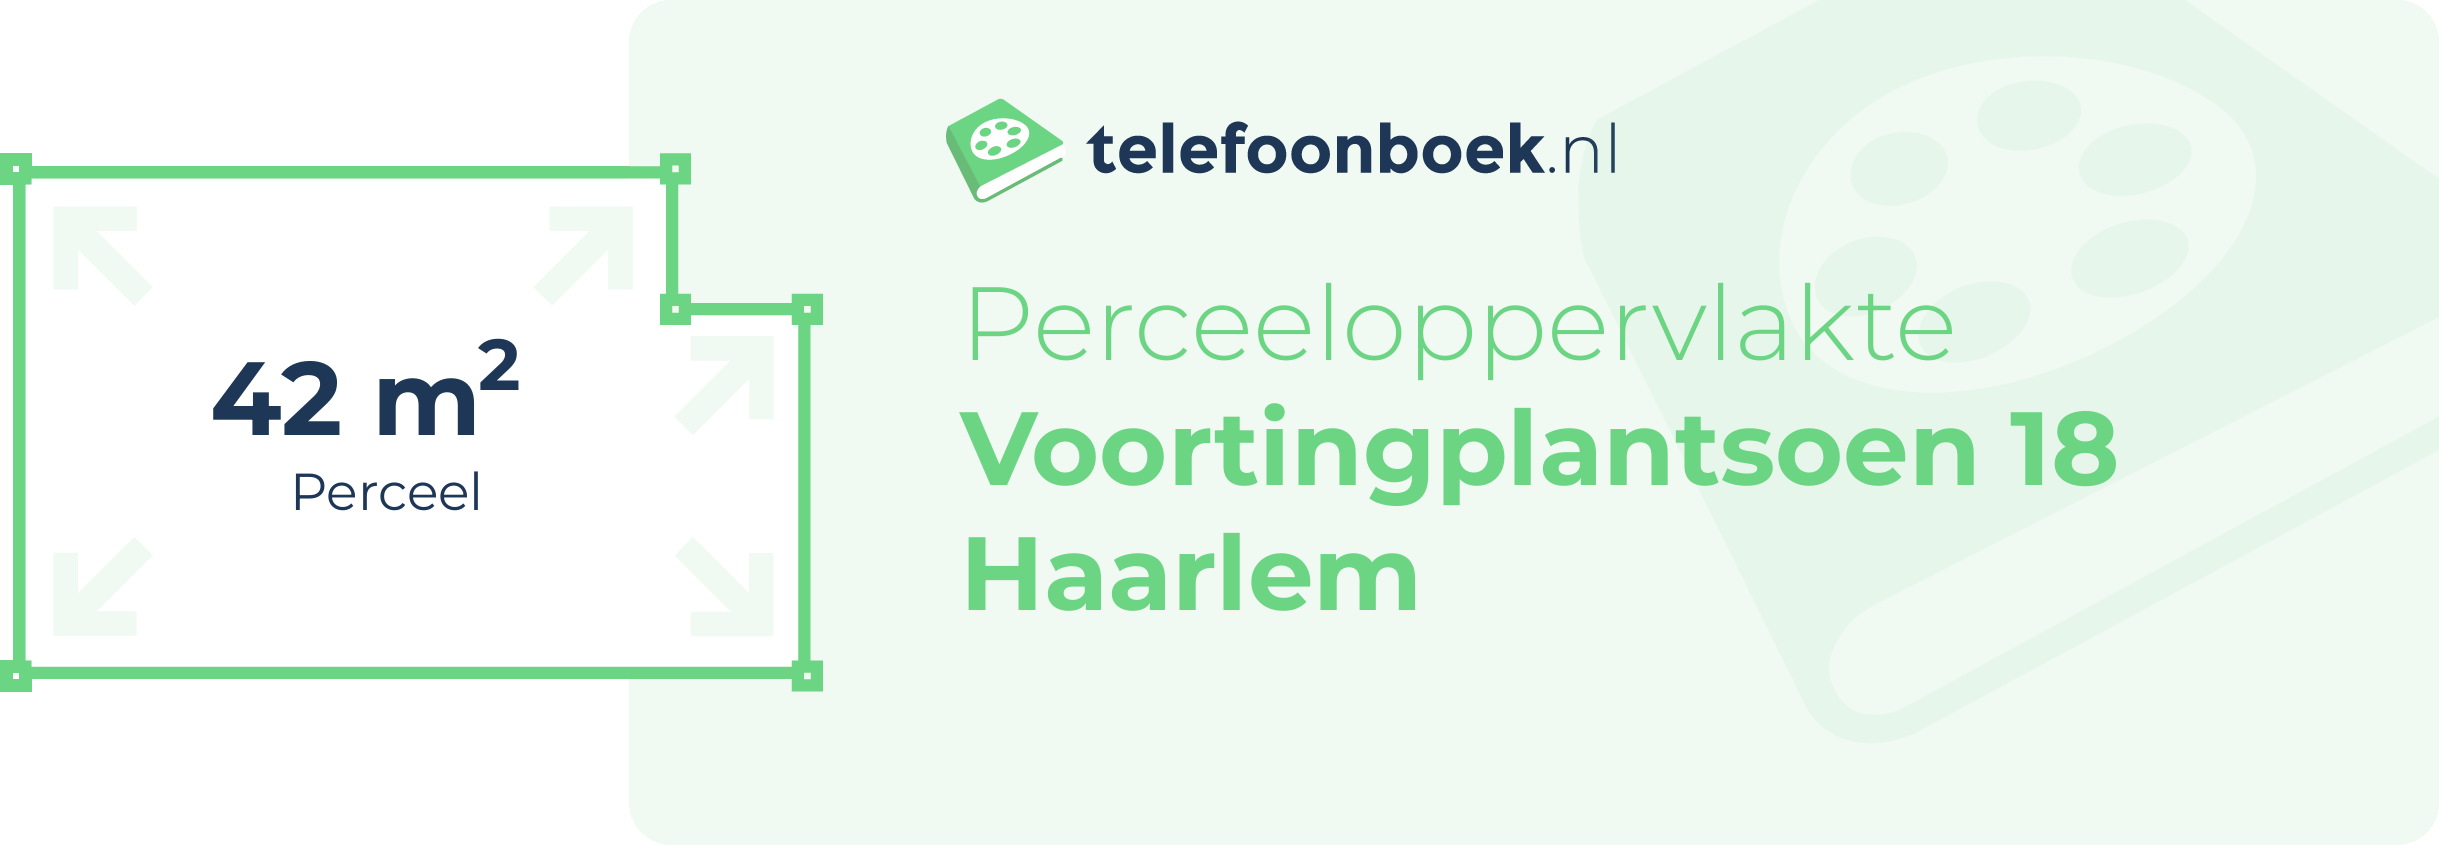 Perceeloppervlakte Voortingplantsoen 18 Haarlem